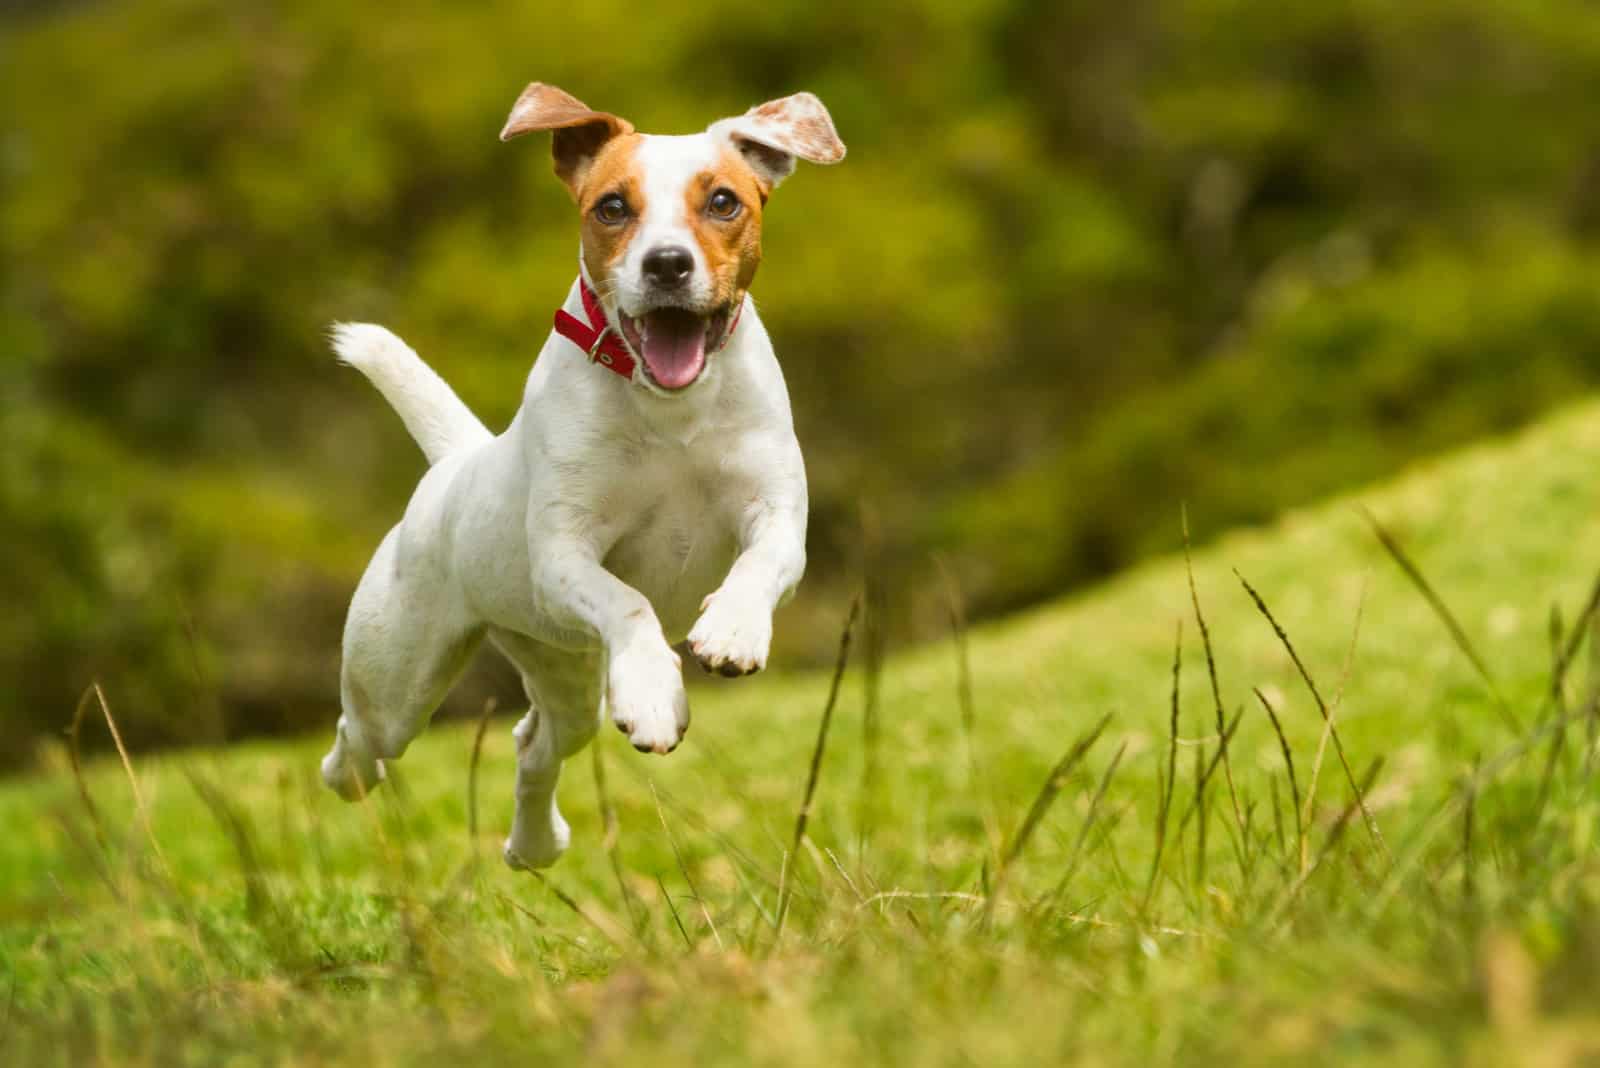 Jack Russell Terrier running across the field